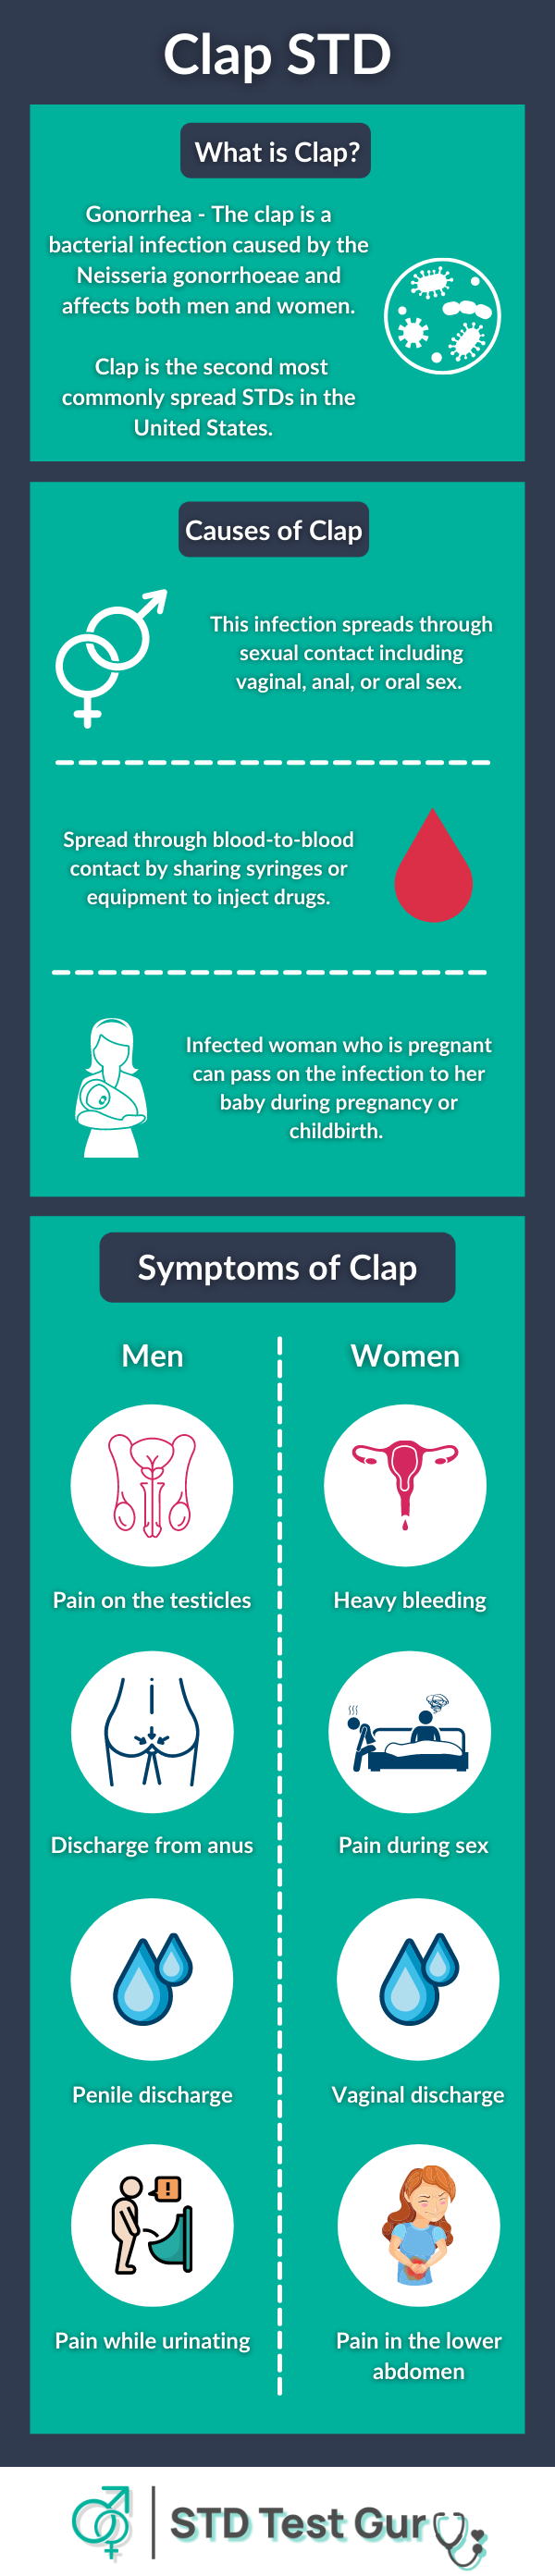 Clap STD: Causes and Symptoms